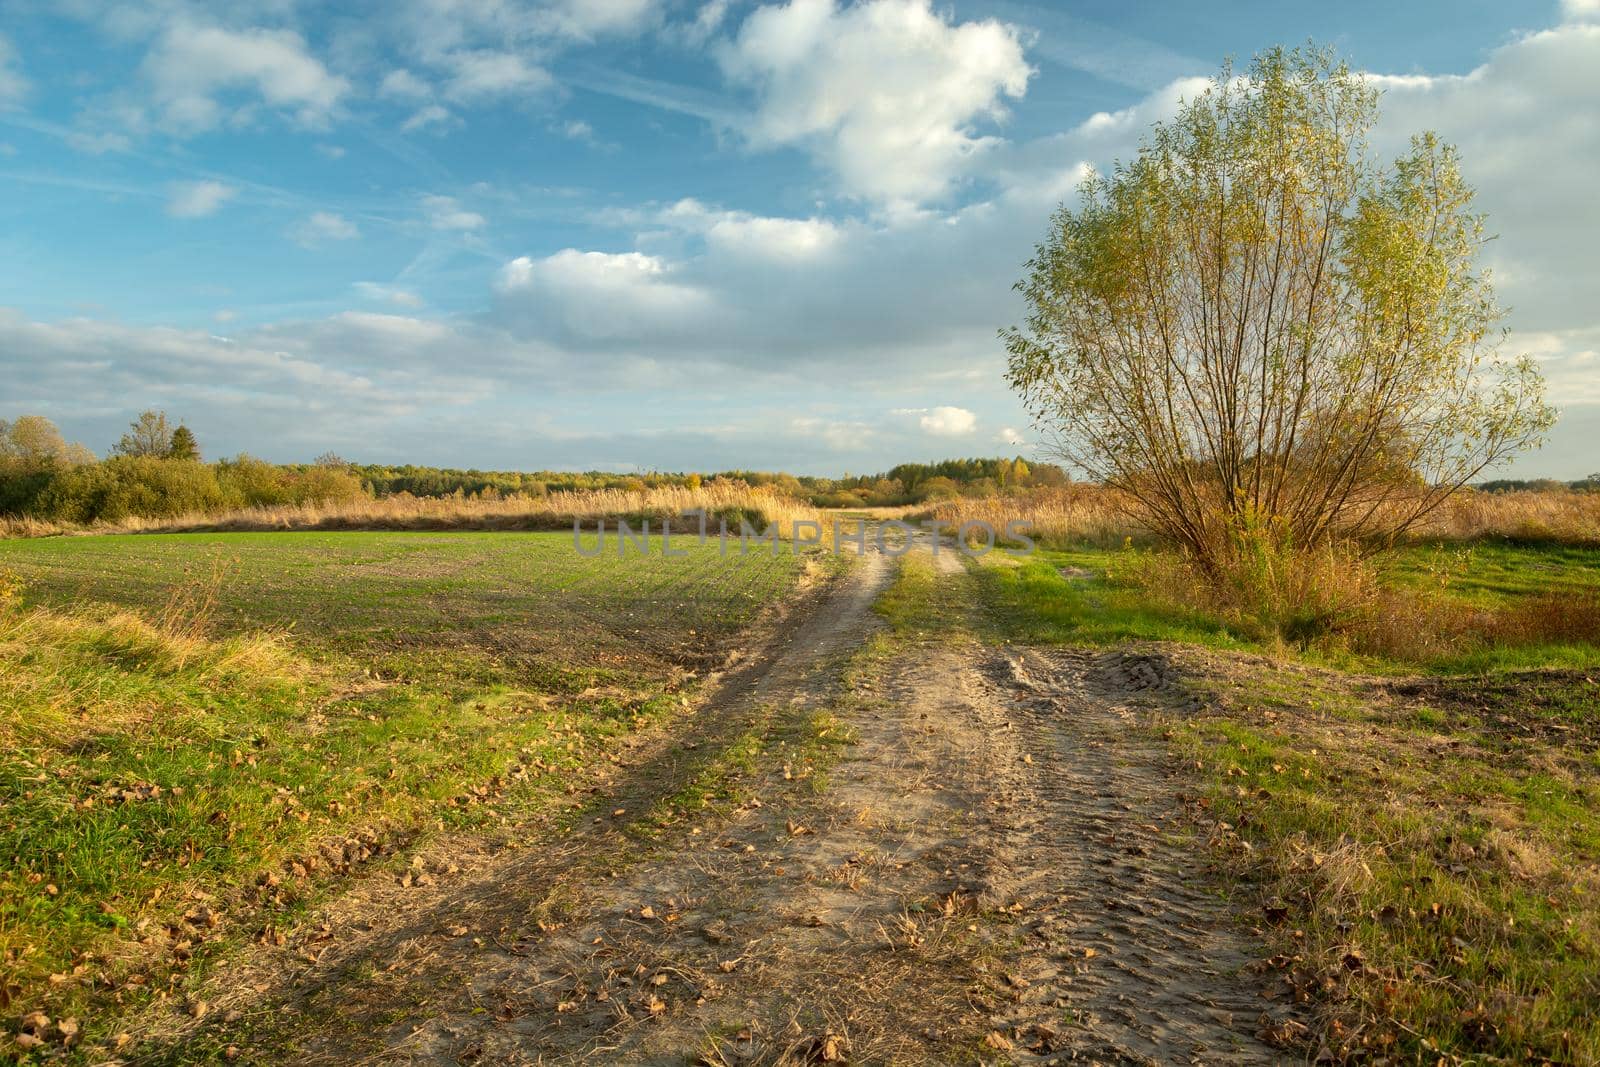 Rural road through rural areas, sunny autumn day